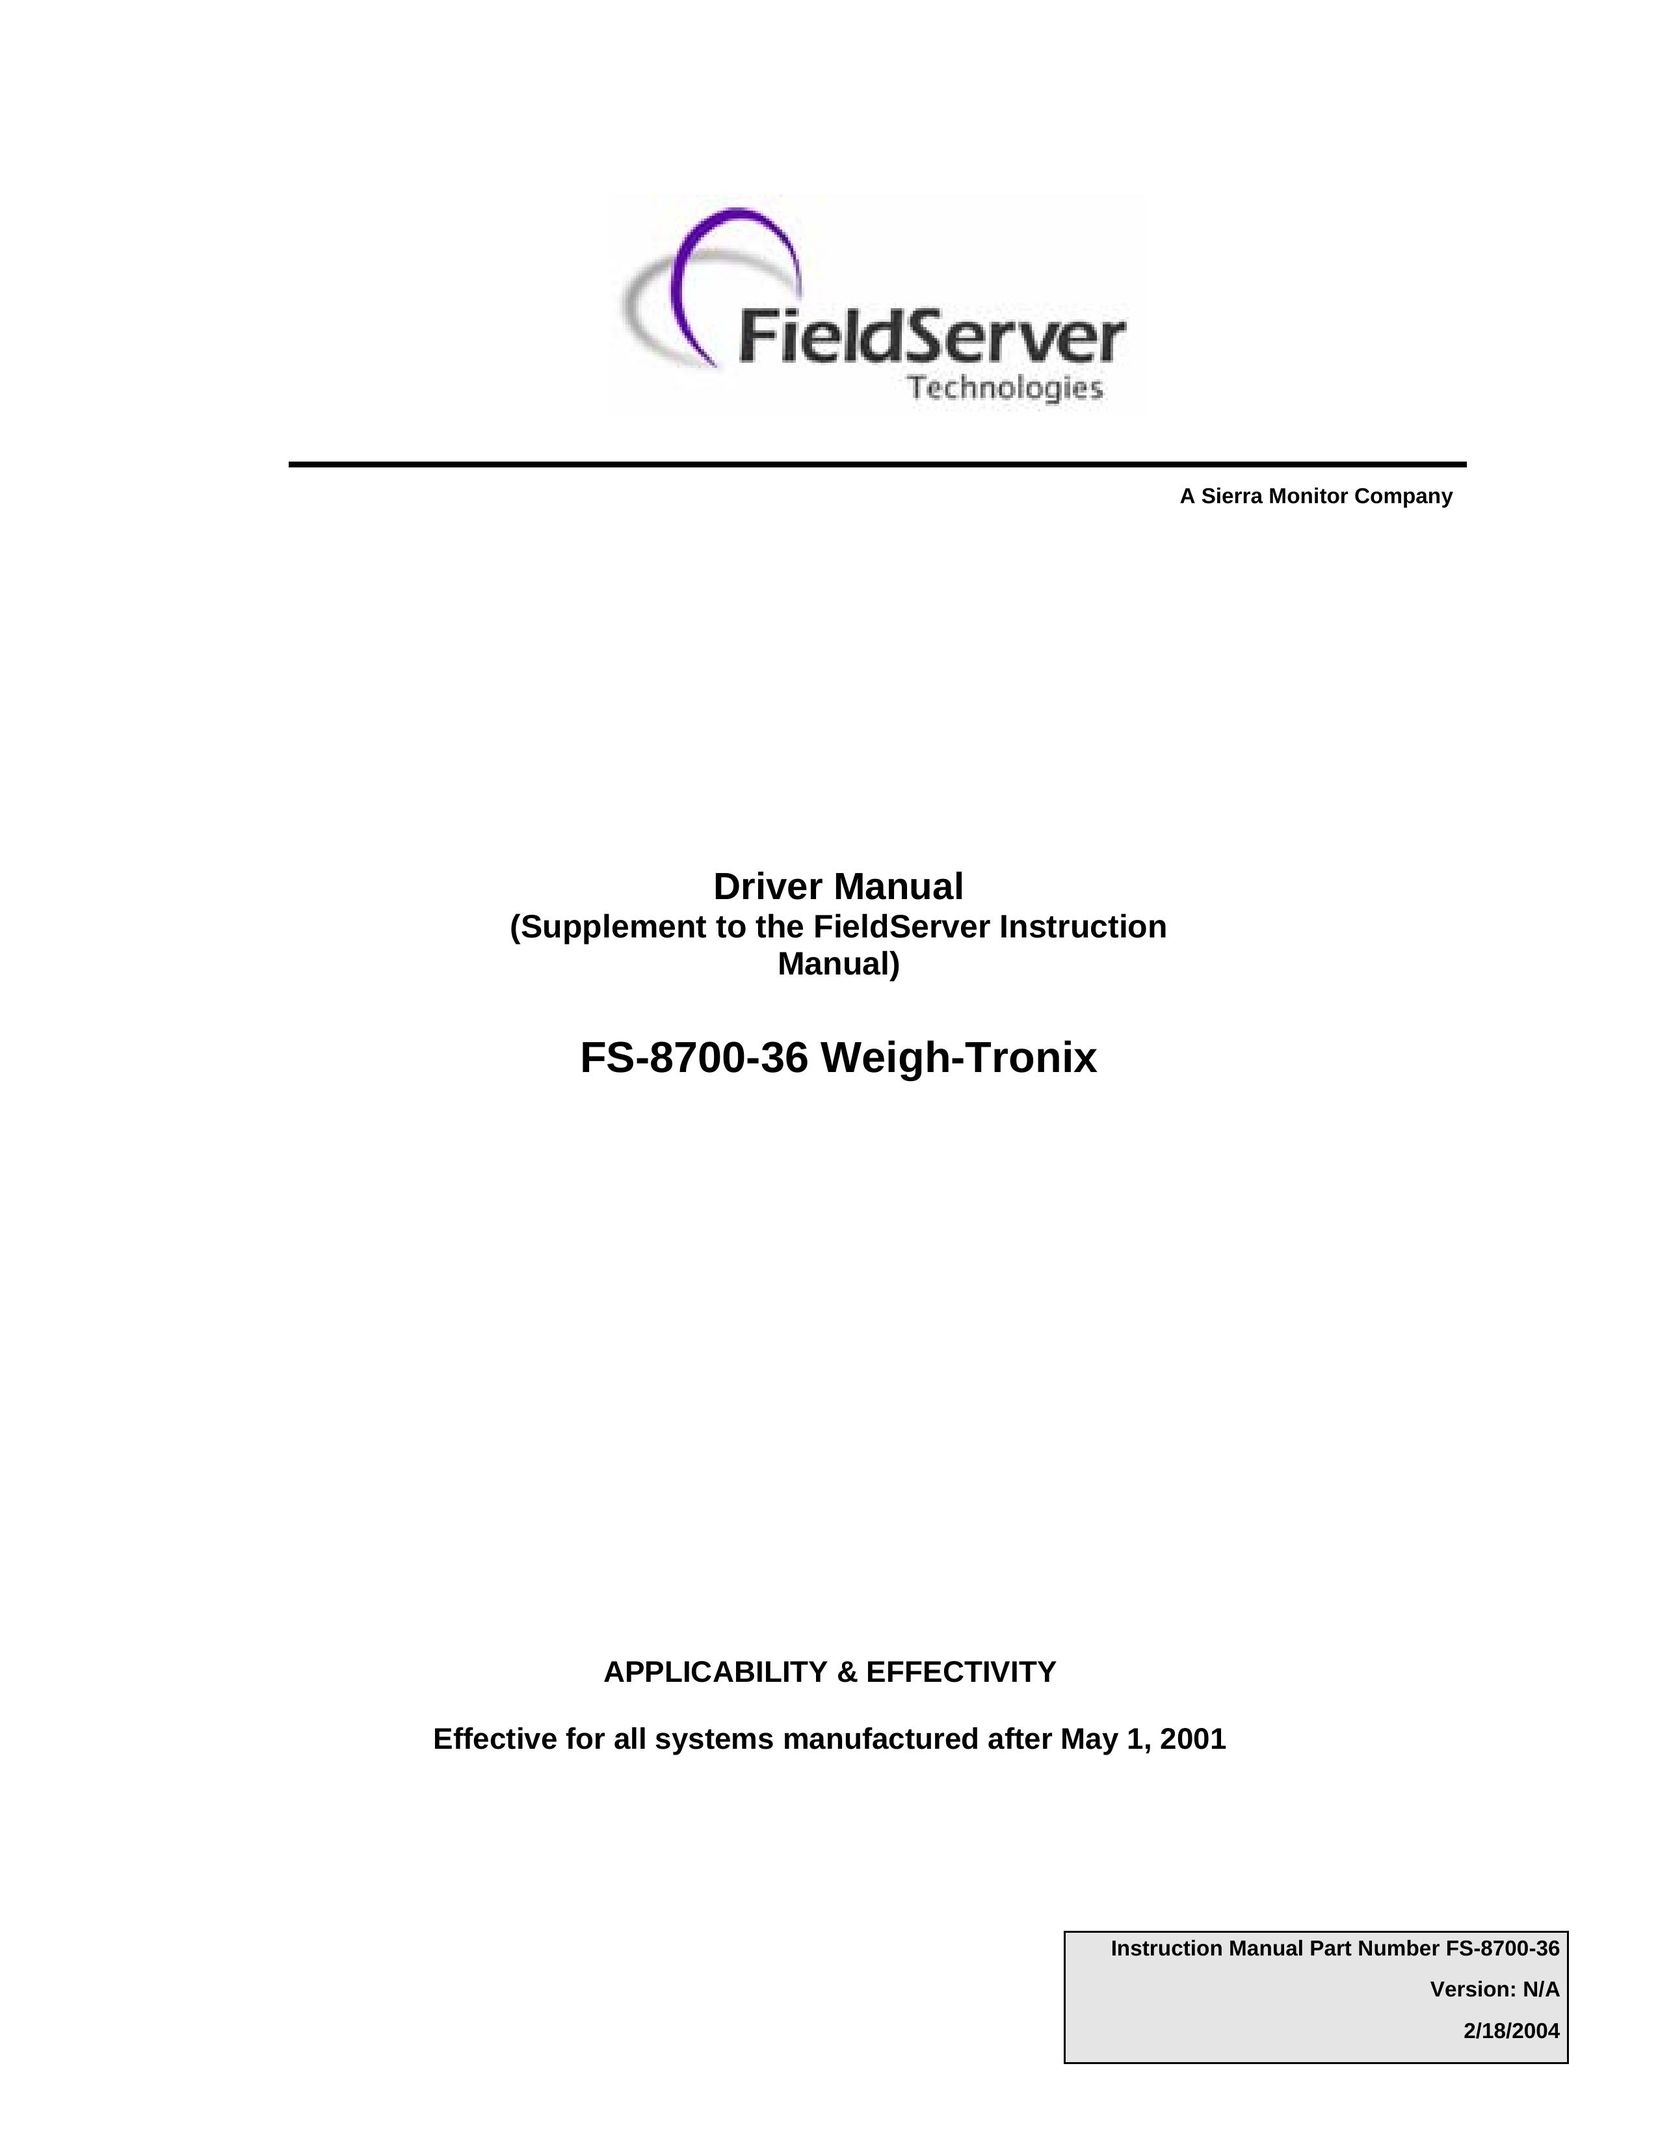 FieldServer FS-8700-36 Computer Drive User Manual